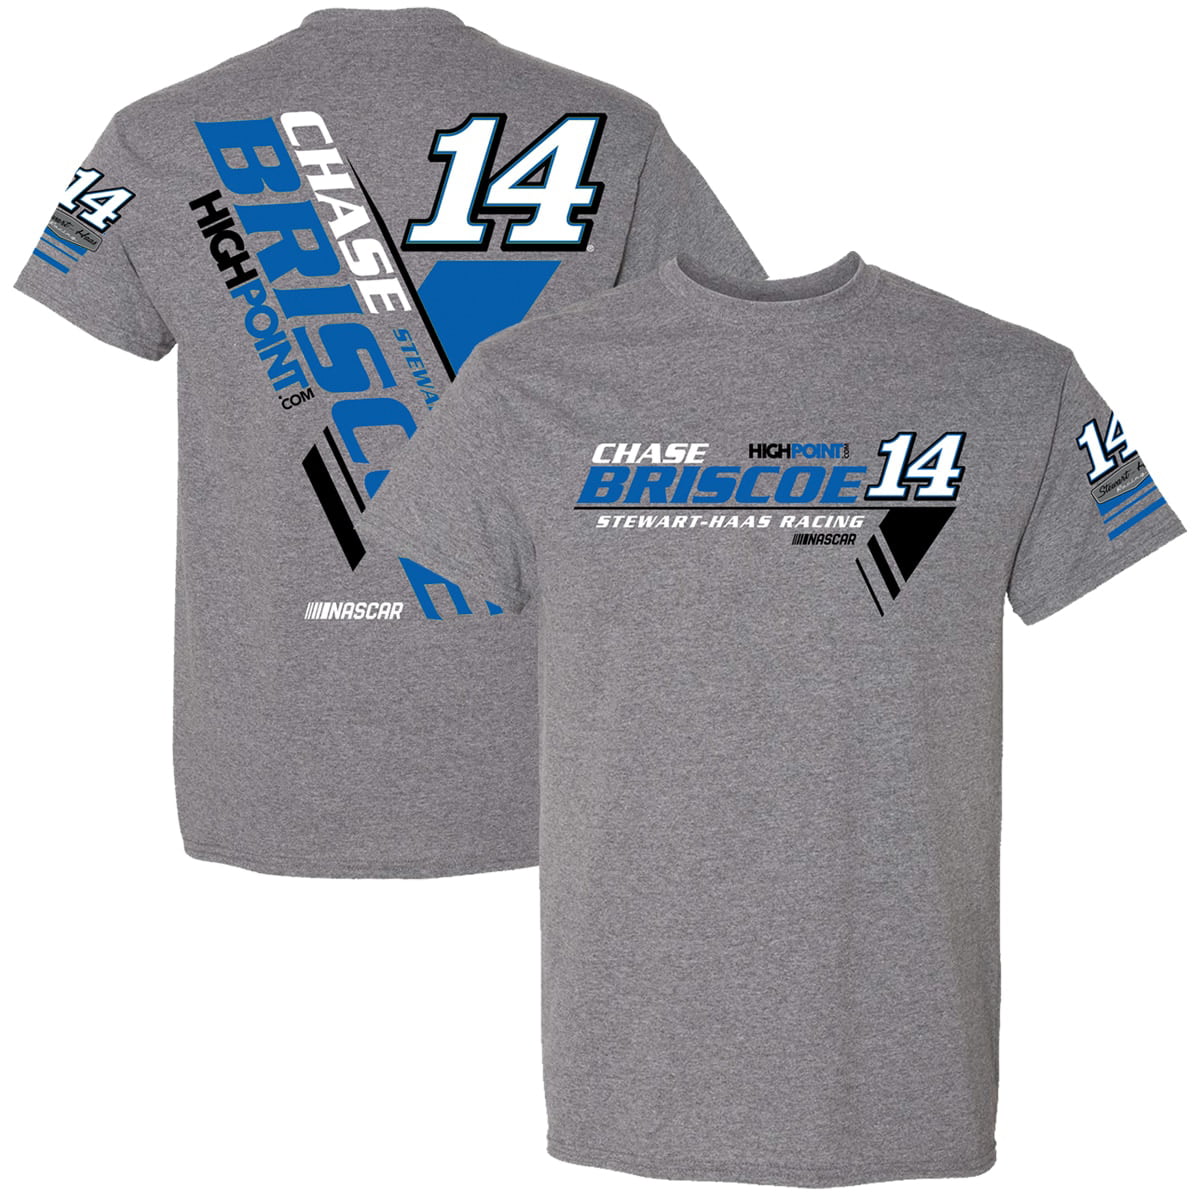 NASCAR Branded Merchandise Core Script Fan Favorite Royal Long Sleeve Shirt